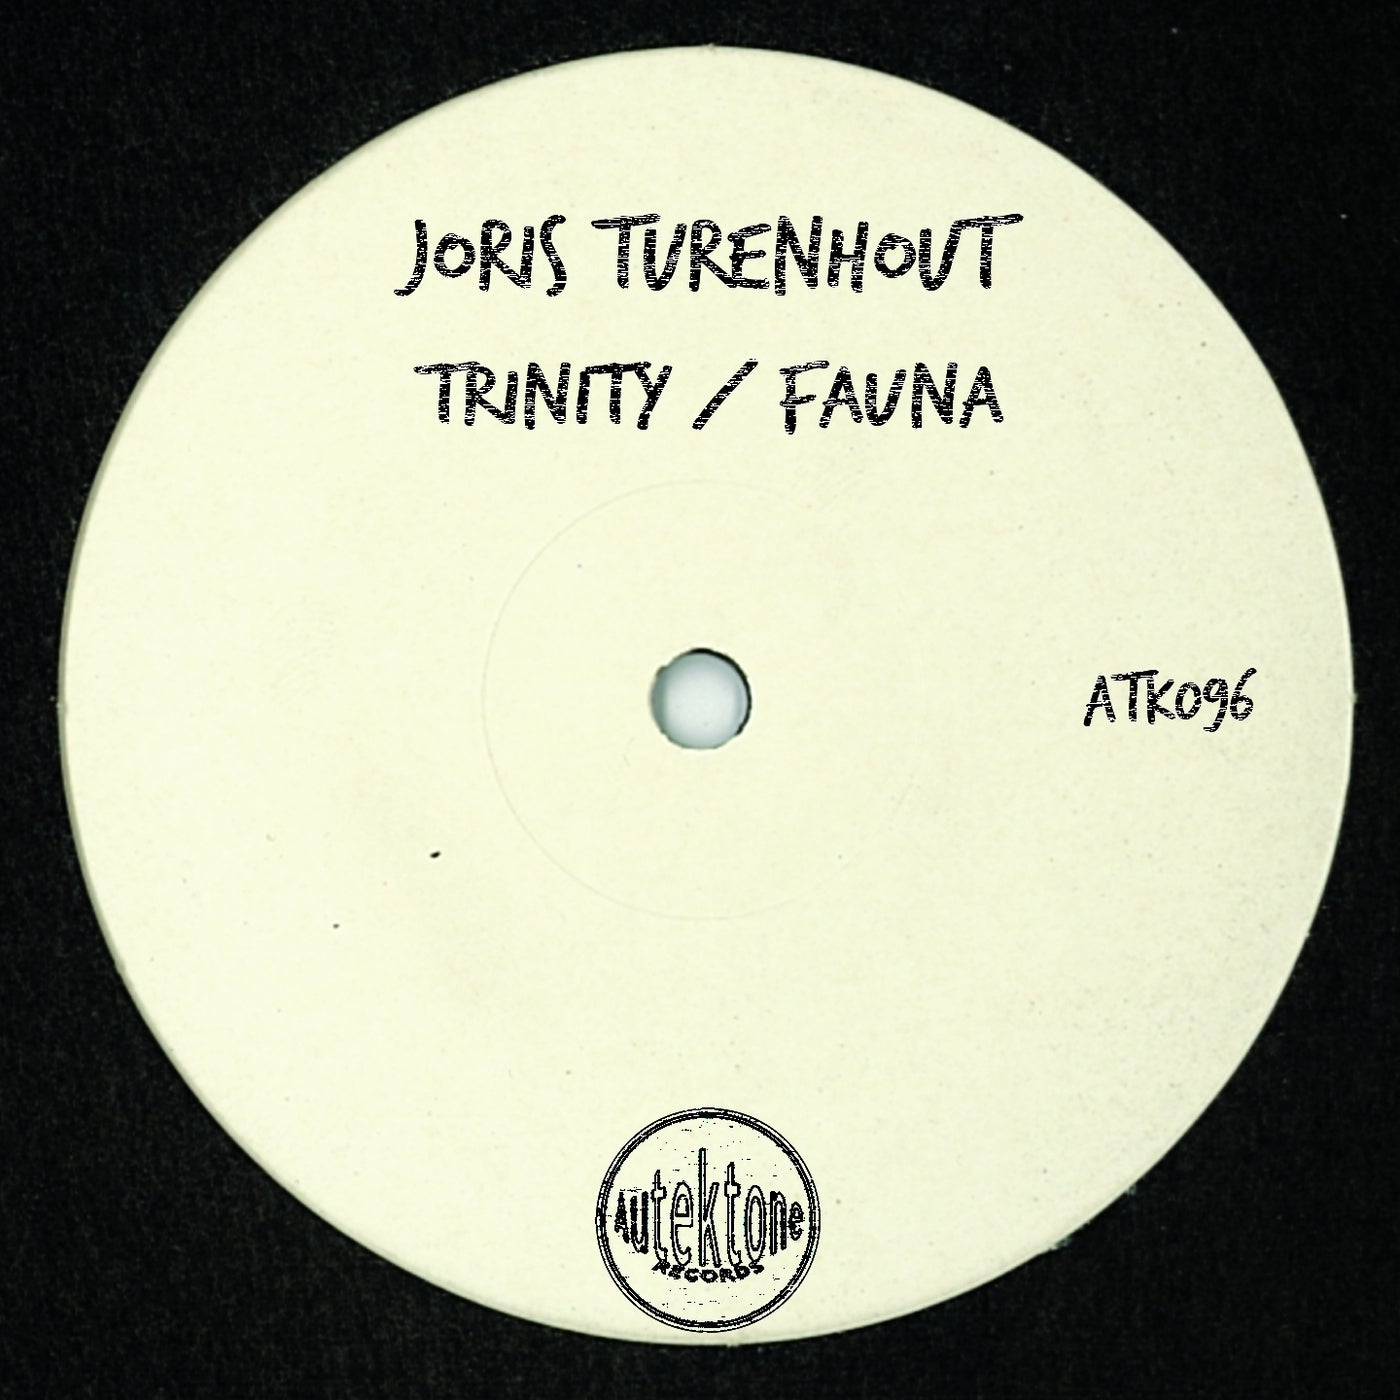 image cover: Joris Turenhout - Trinity / Fauna / ATK096